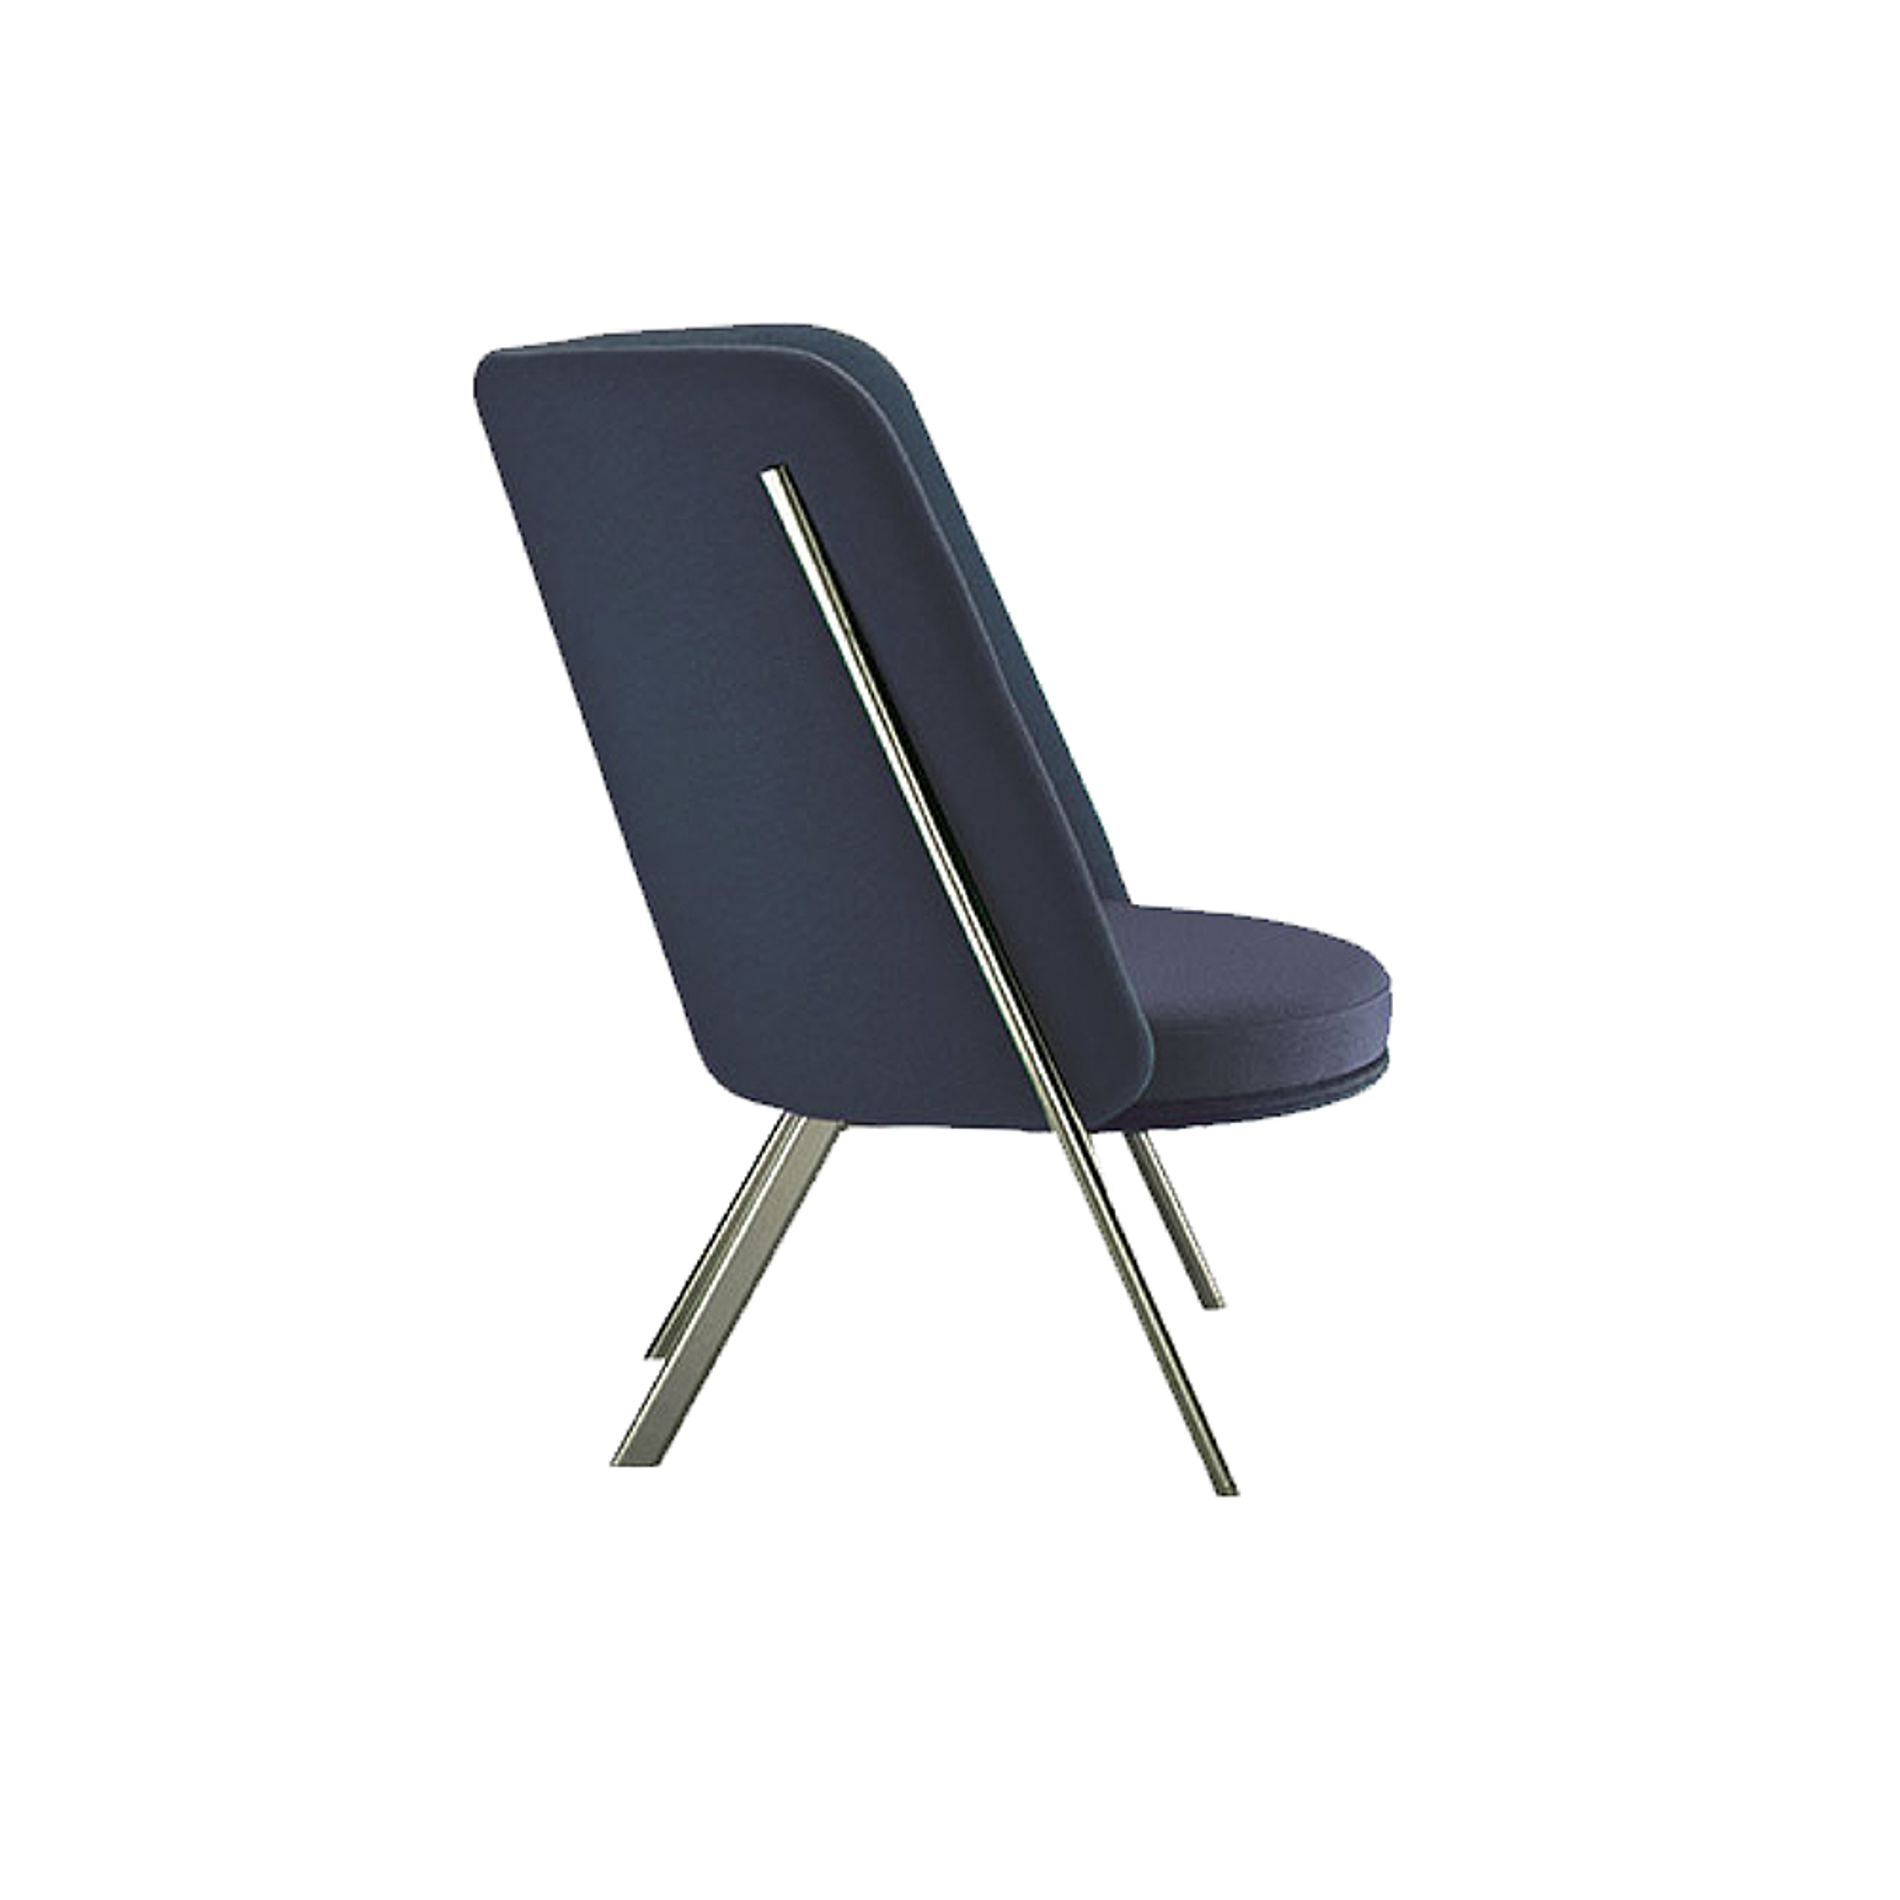 TECTA D70 Chair /C70 Stool - Black